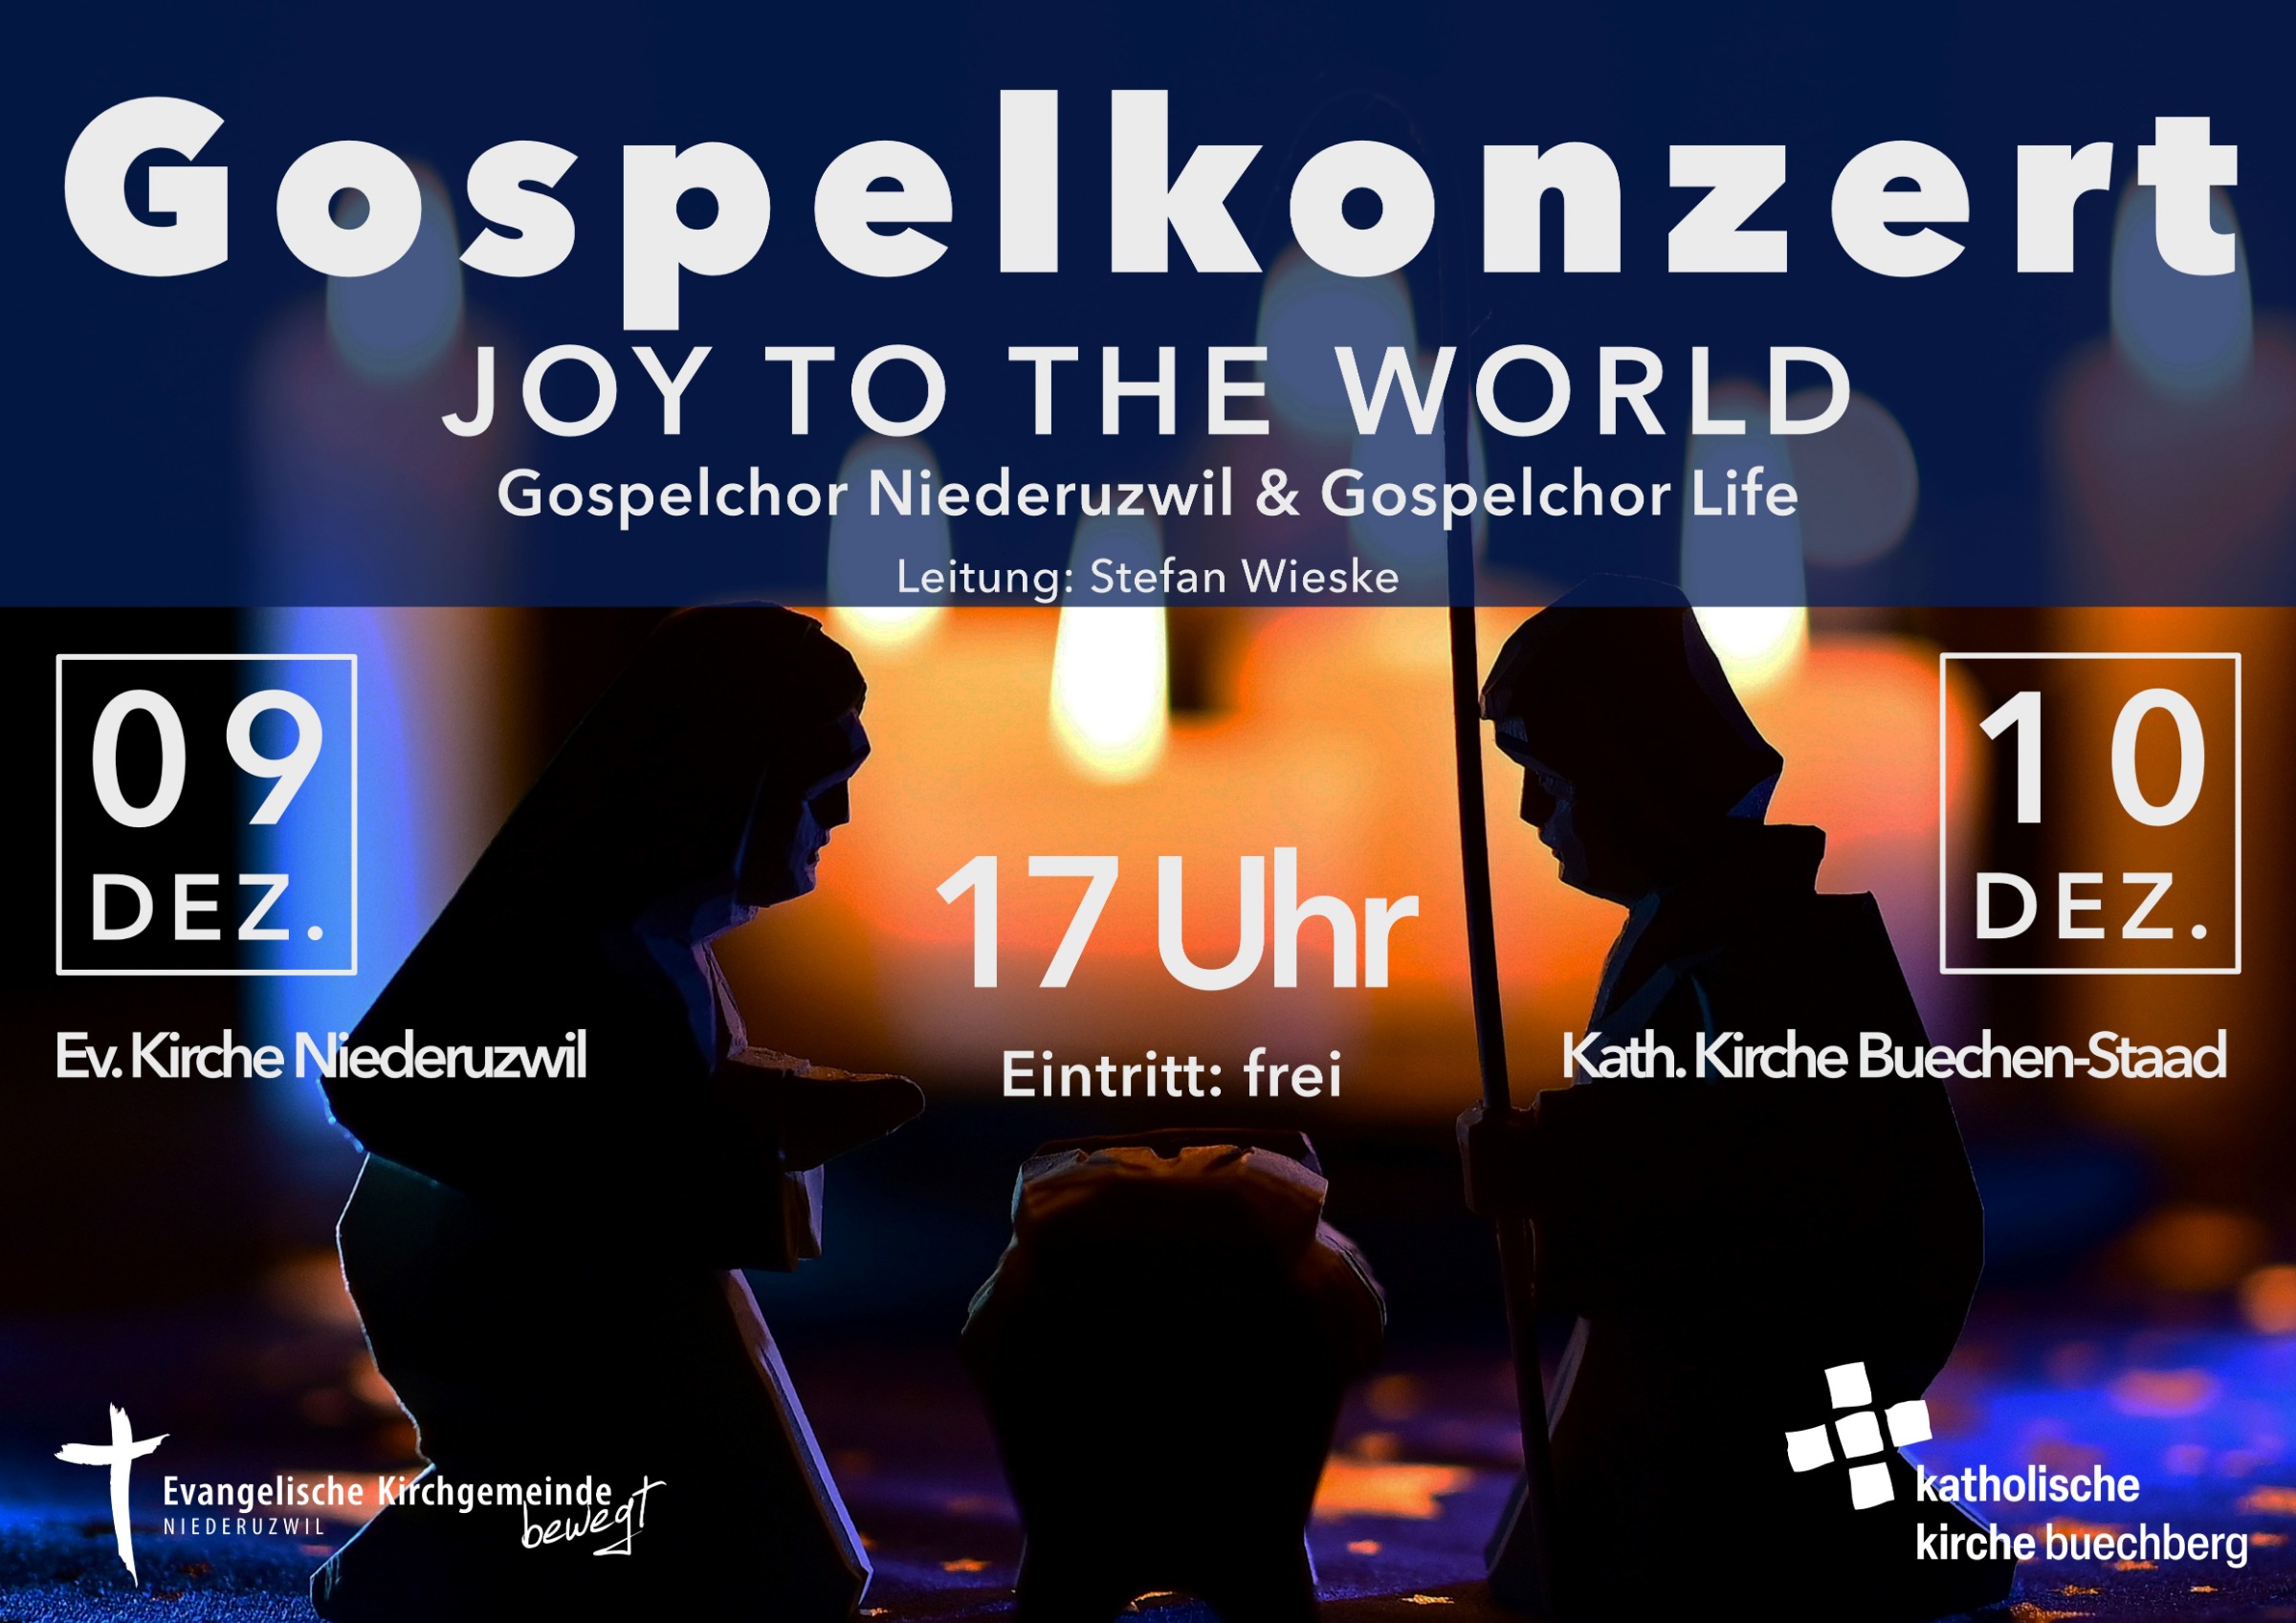 Gsopelkonzert "Joy to the world"